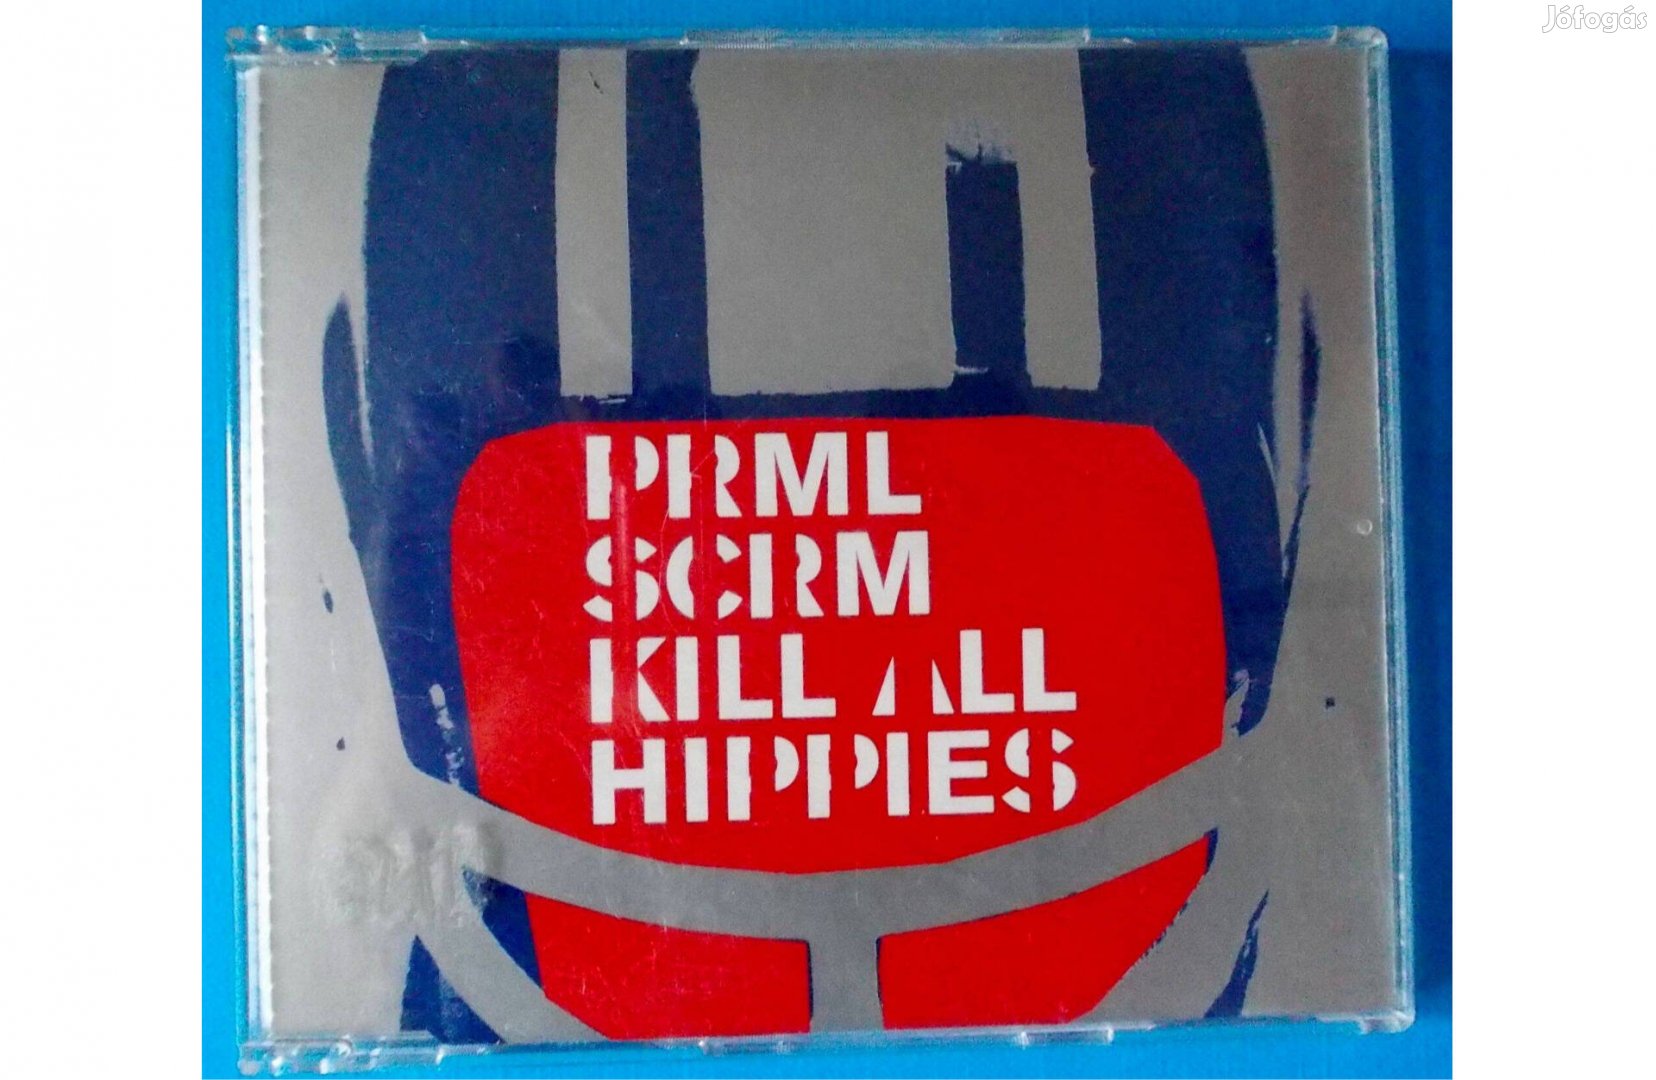 Primal Scream Kill All Hippies, 2000, audio-CD, single